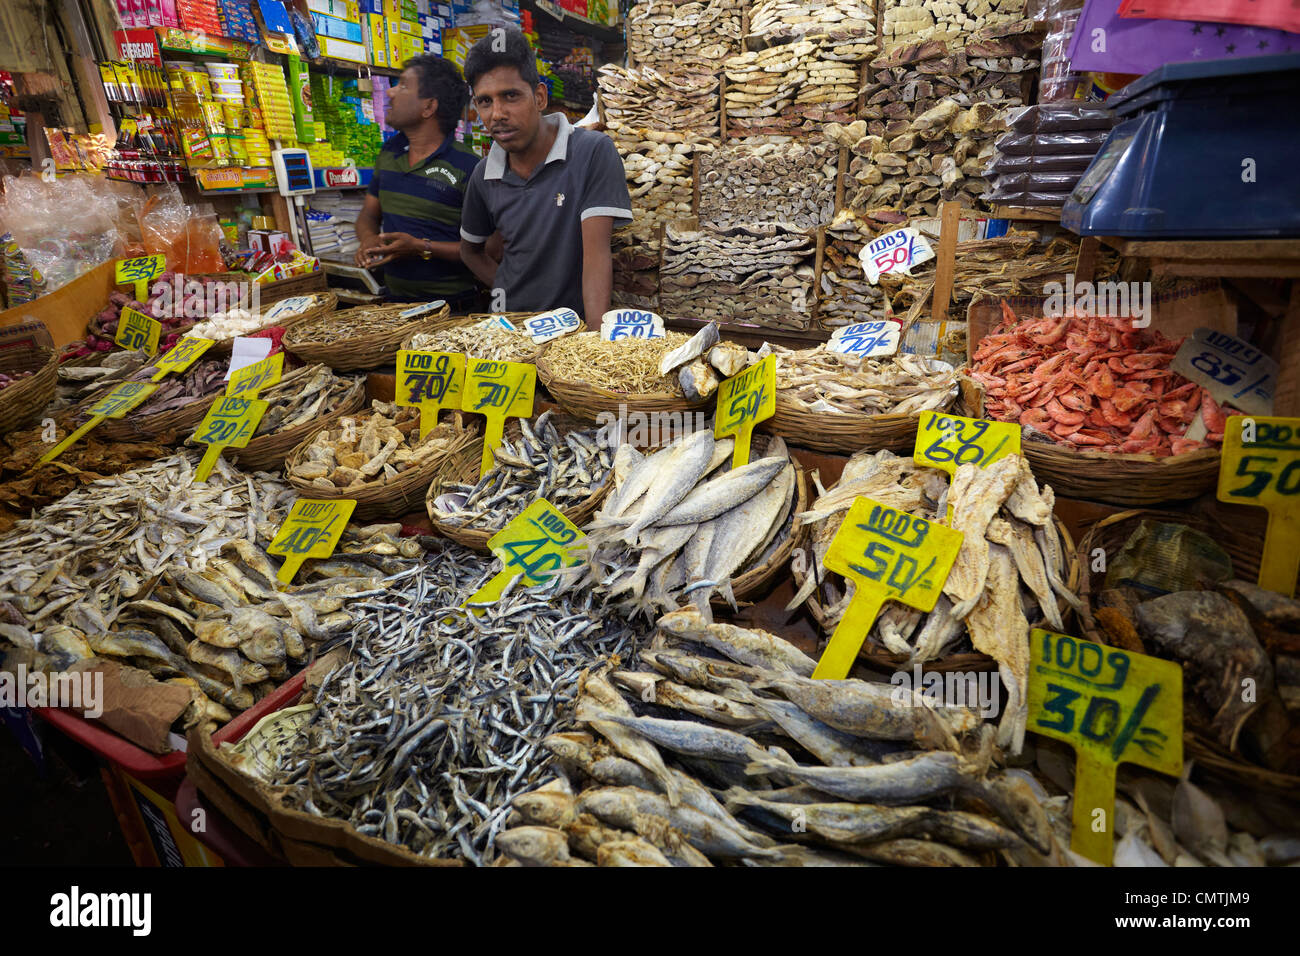 Sri Lanka - Kandy Nuwara Eliya, province, séché et salé poisson au marché Banque D'Images